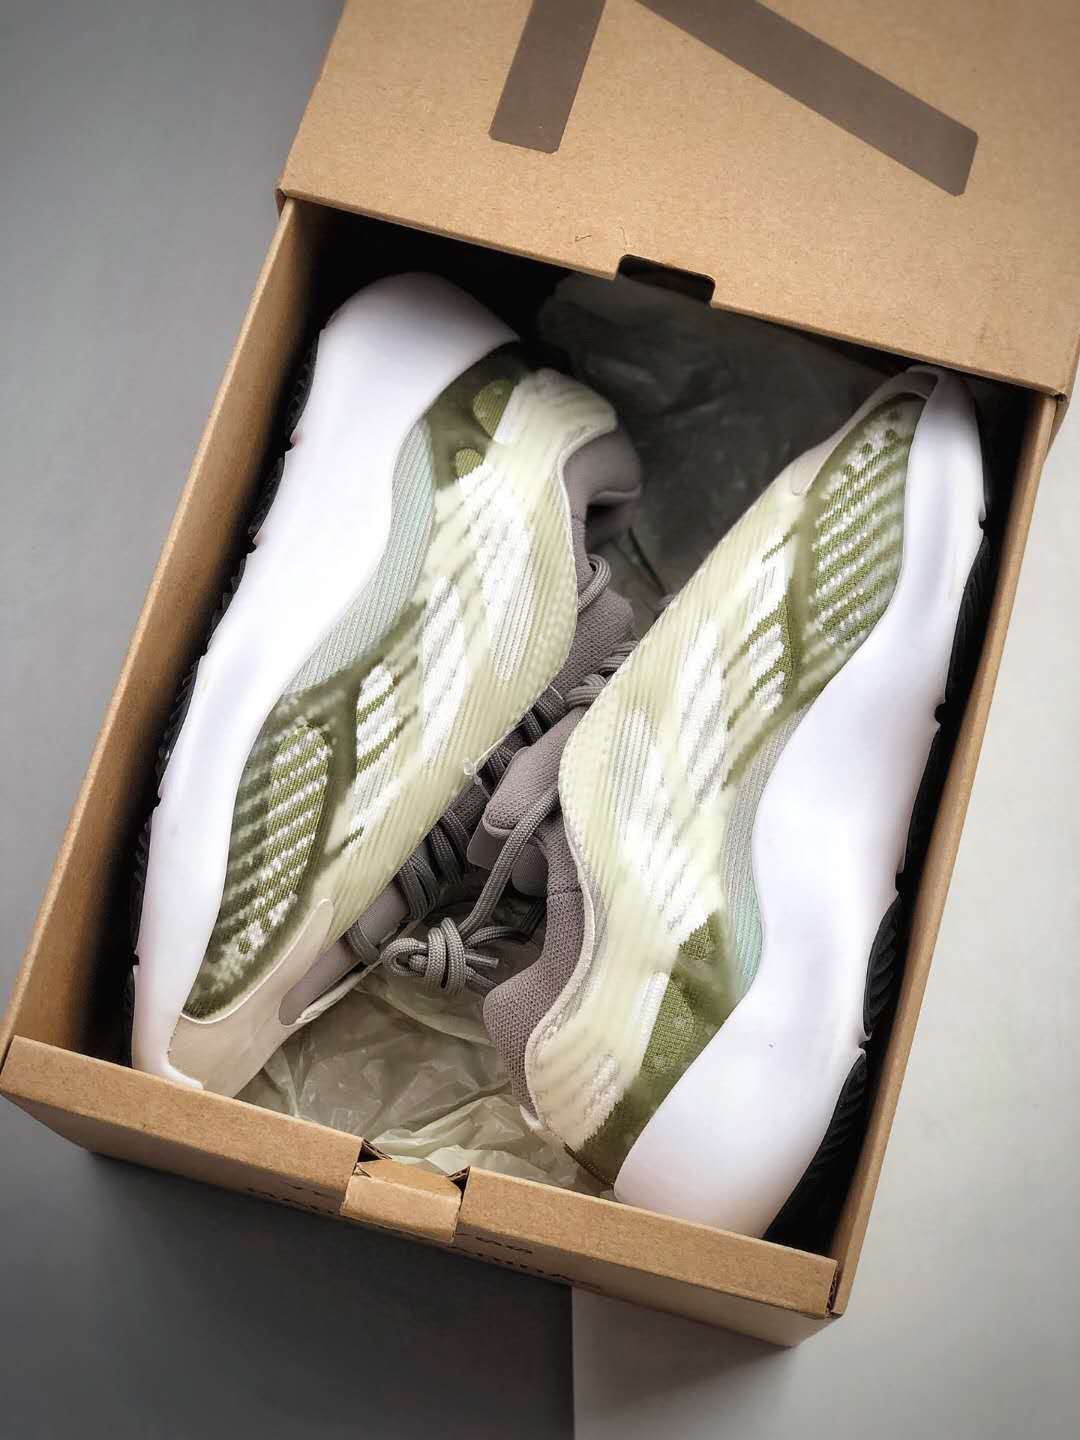 Adidas Yeezy Foam Runner Boost 700 V3 EF9899 - Stylish and Comfortable Footwear